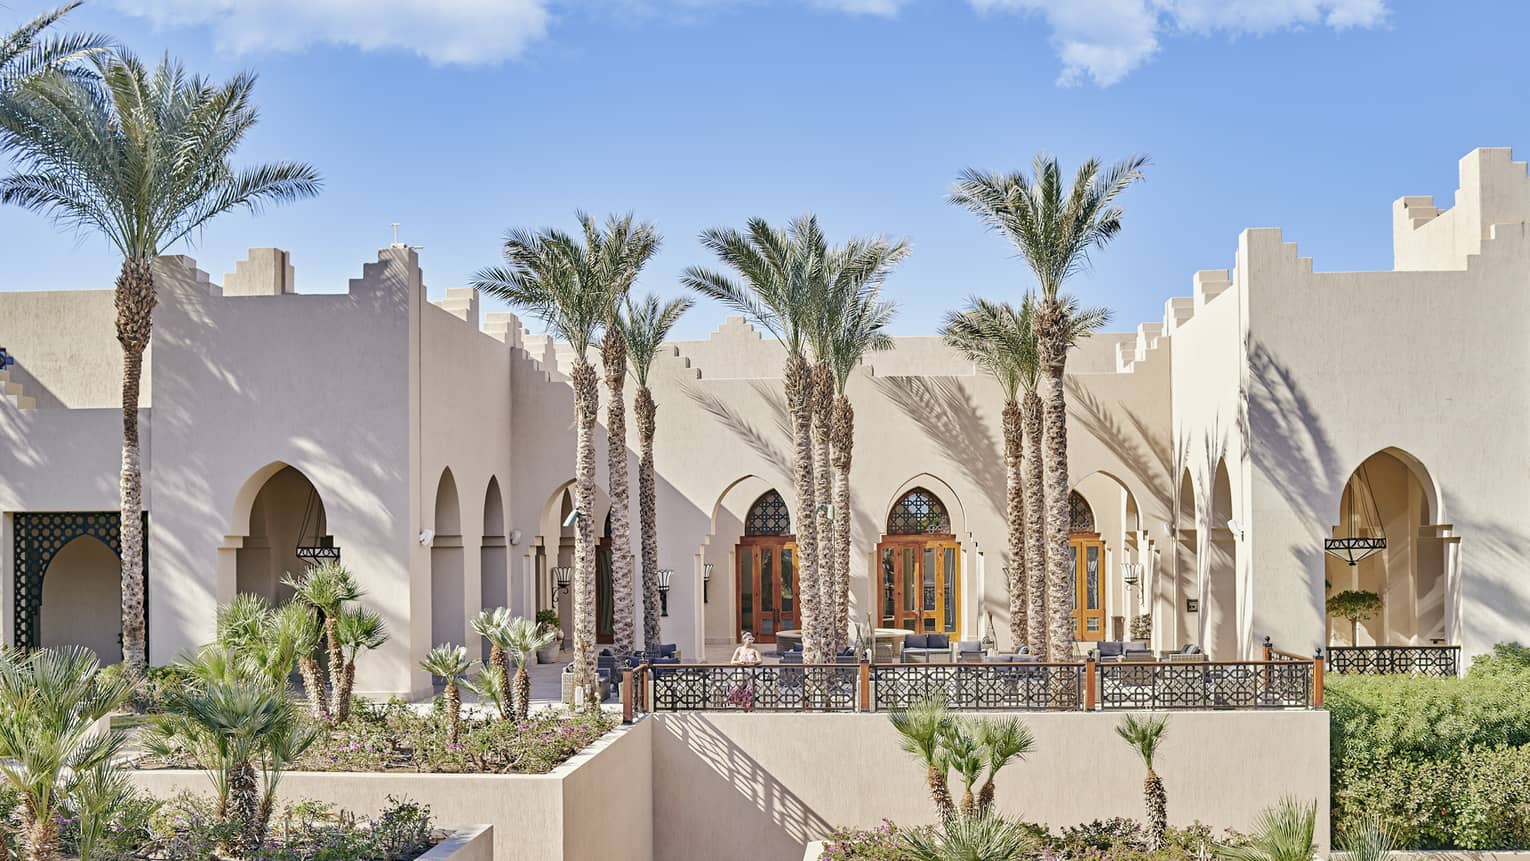 Four Seasons Resort Sharm El Sheikh, Egypt building exterior, palm trees